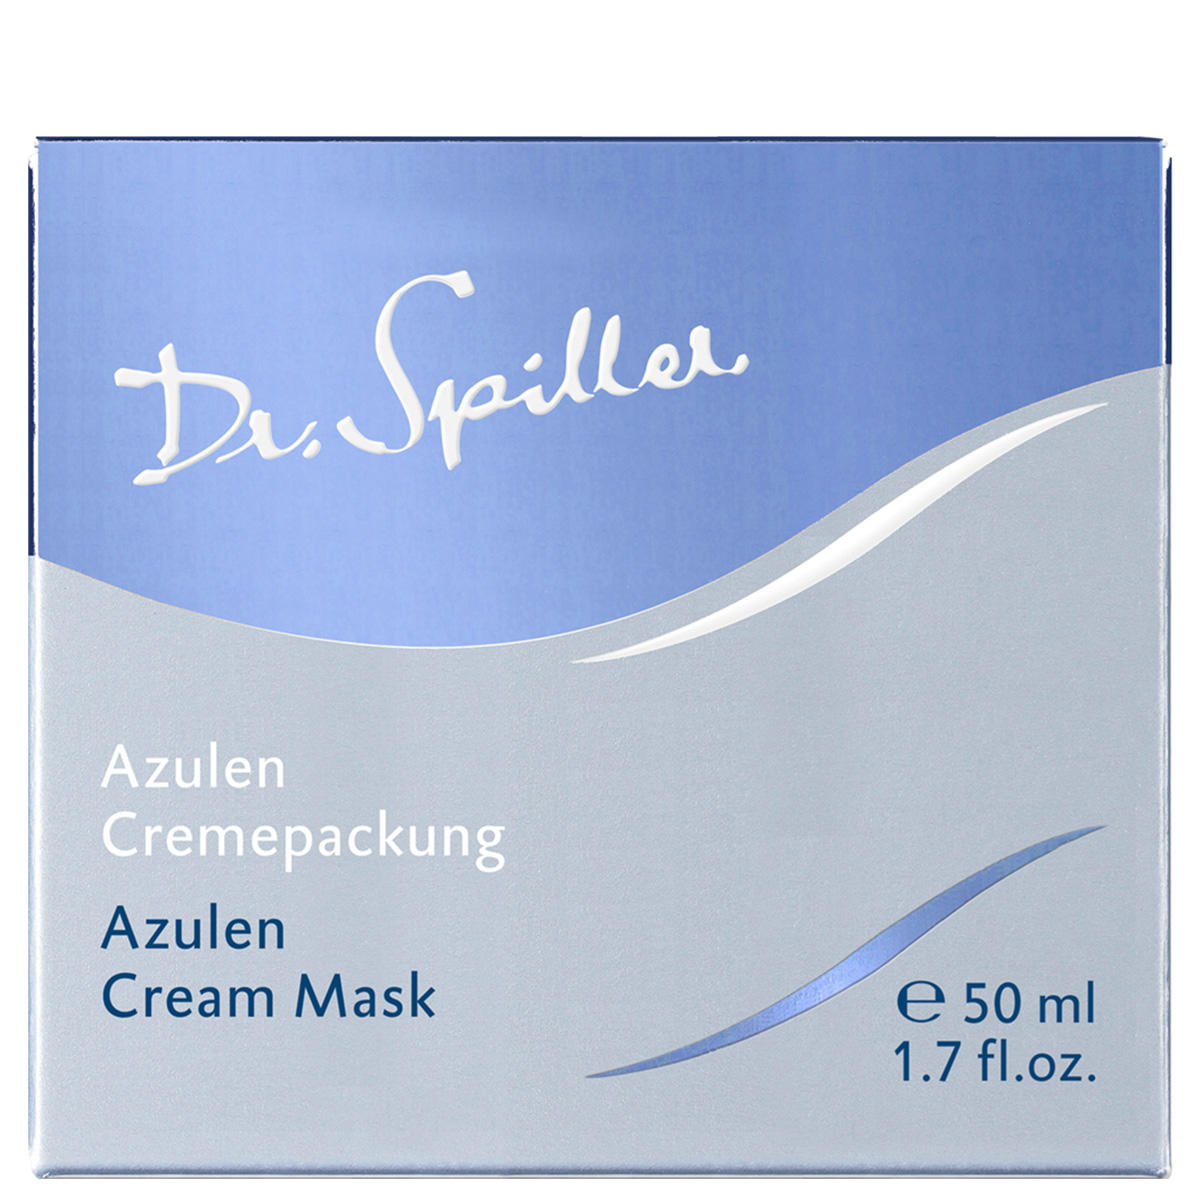 Dr. Spiller Biomimetic SkinCare Azulen Cremepackung 50 ml - 3